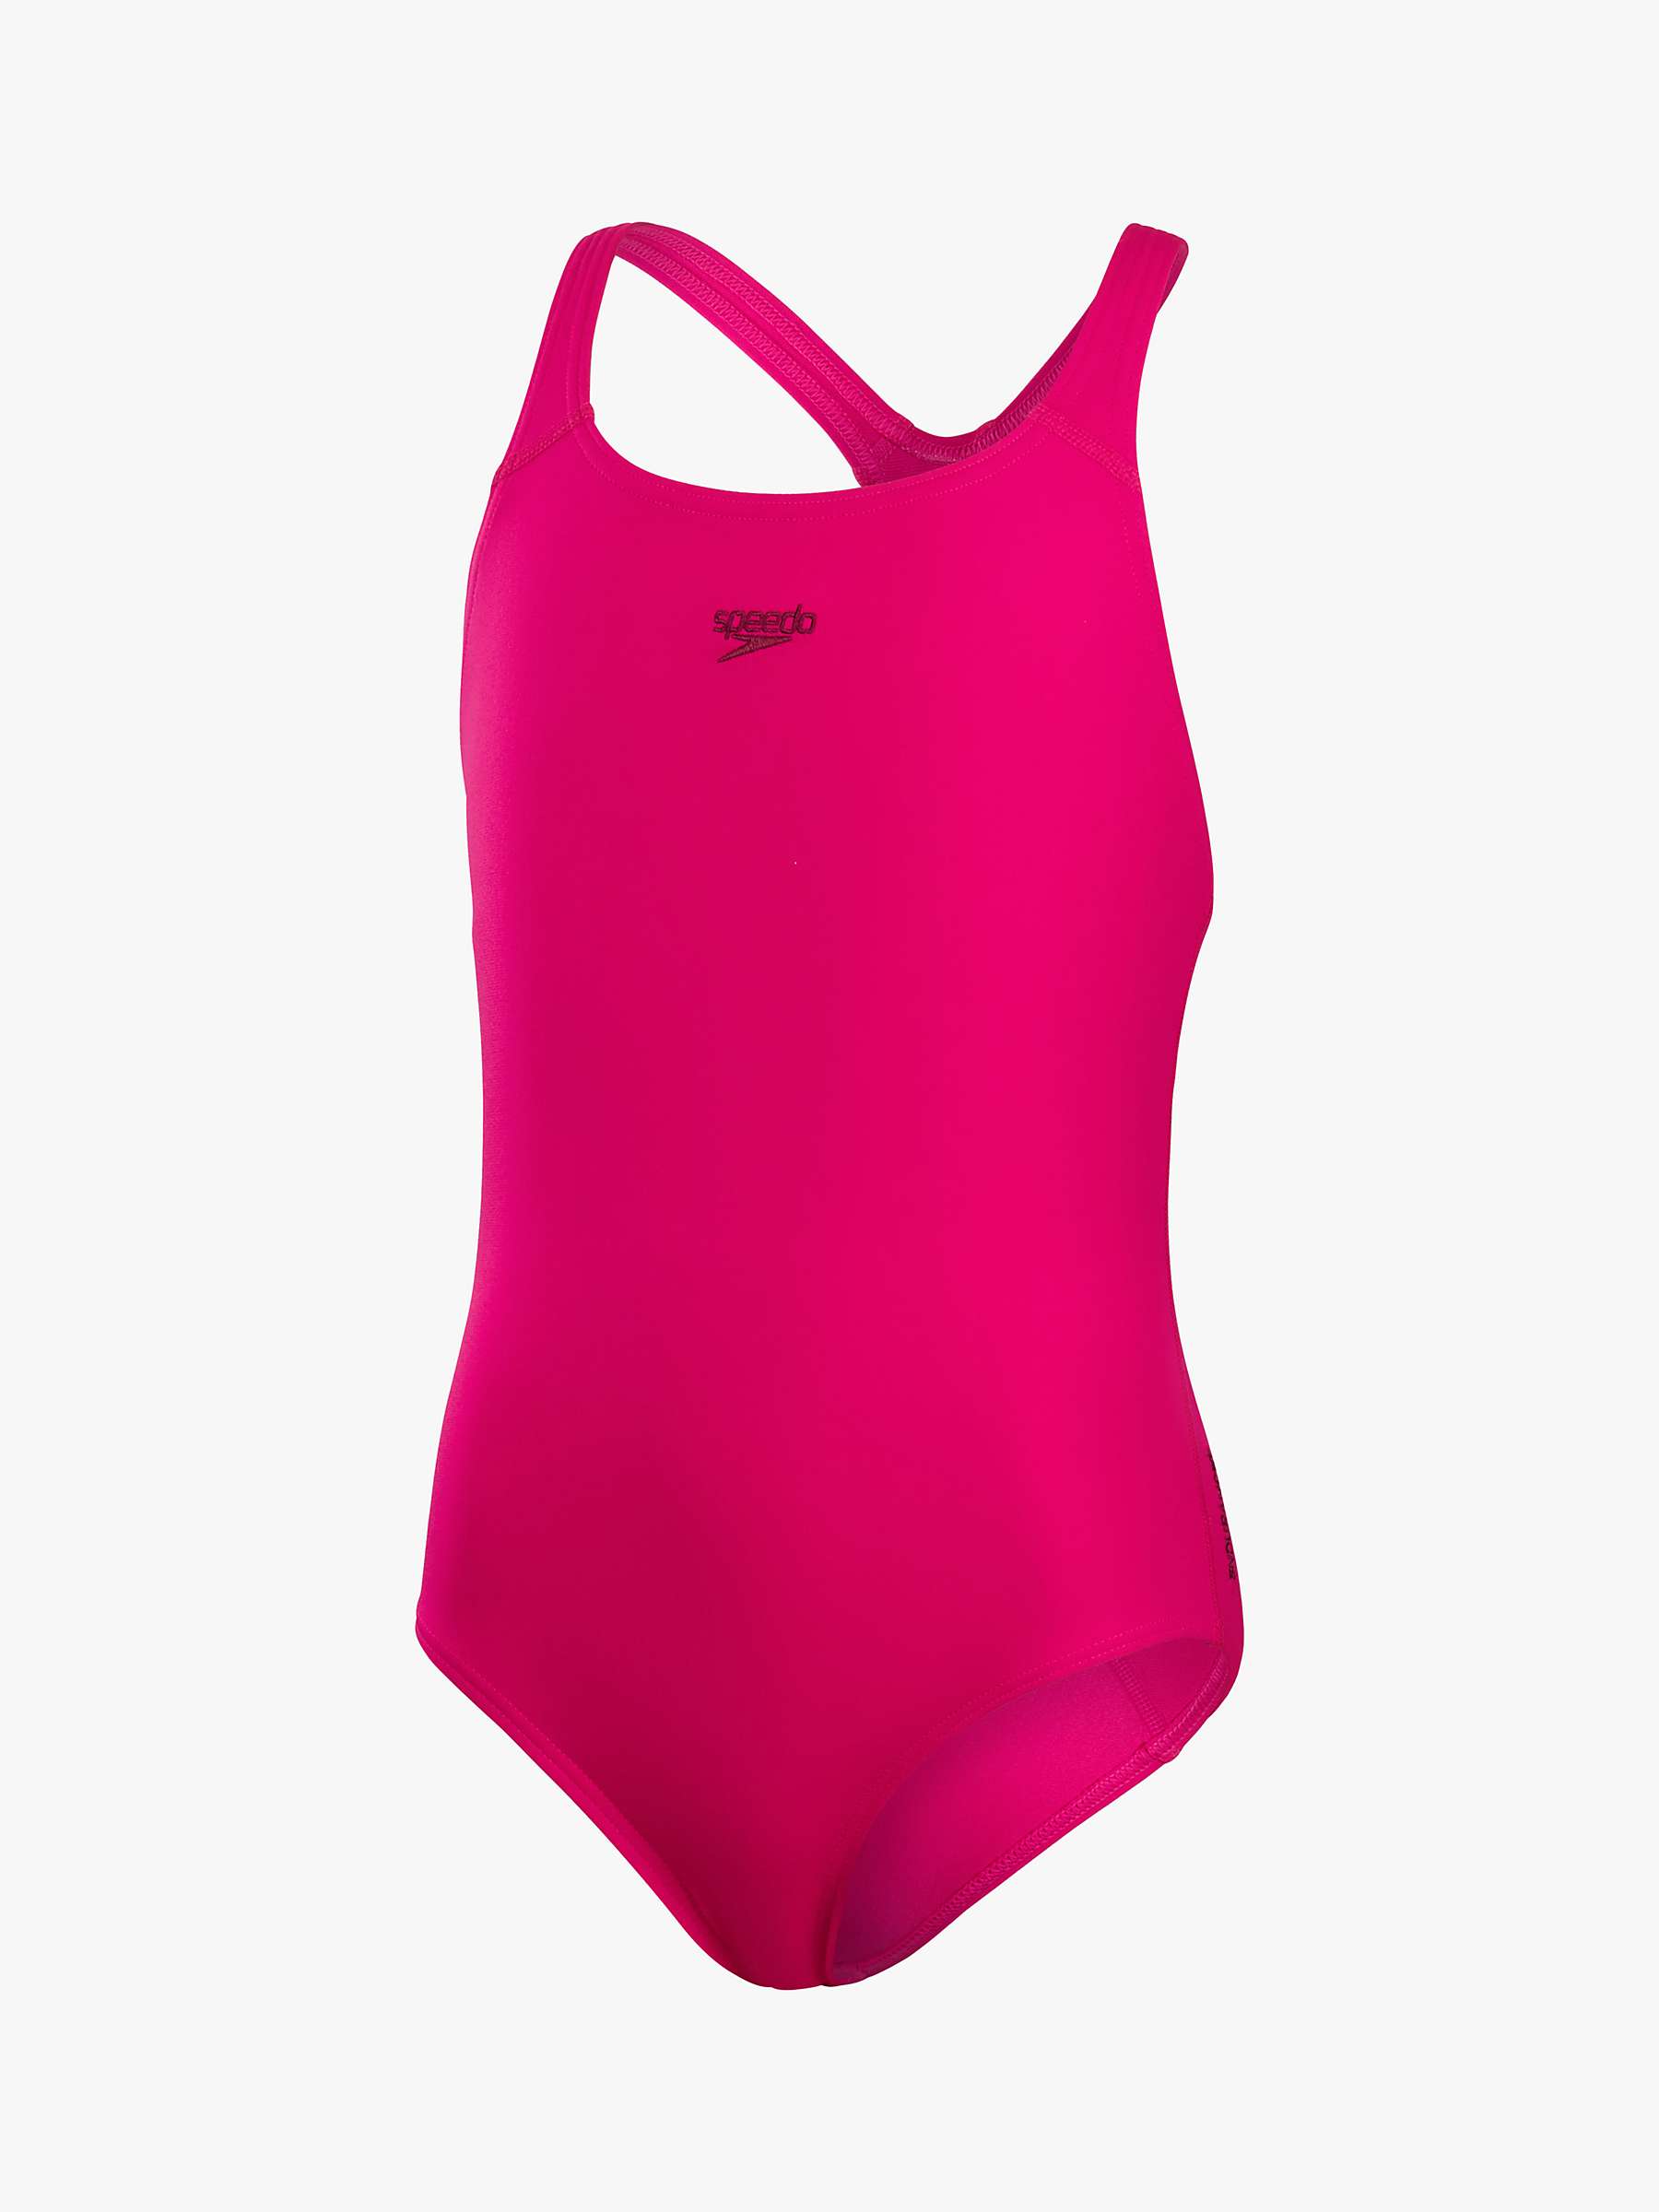 Buy Speedo Kids' Essential Medalist Swimsuit, Pink Online at johnlewis.com